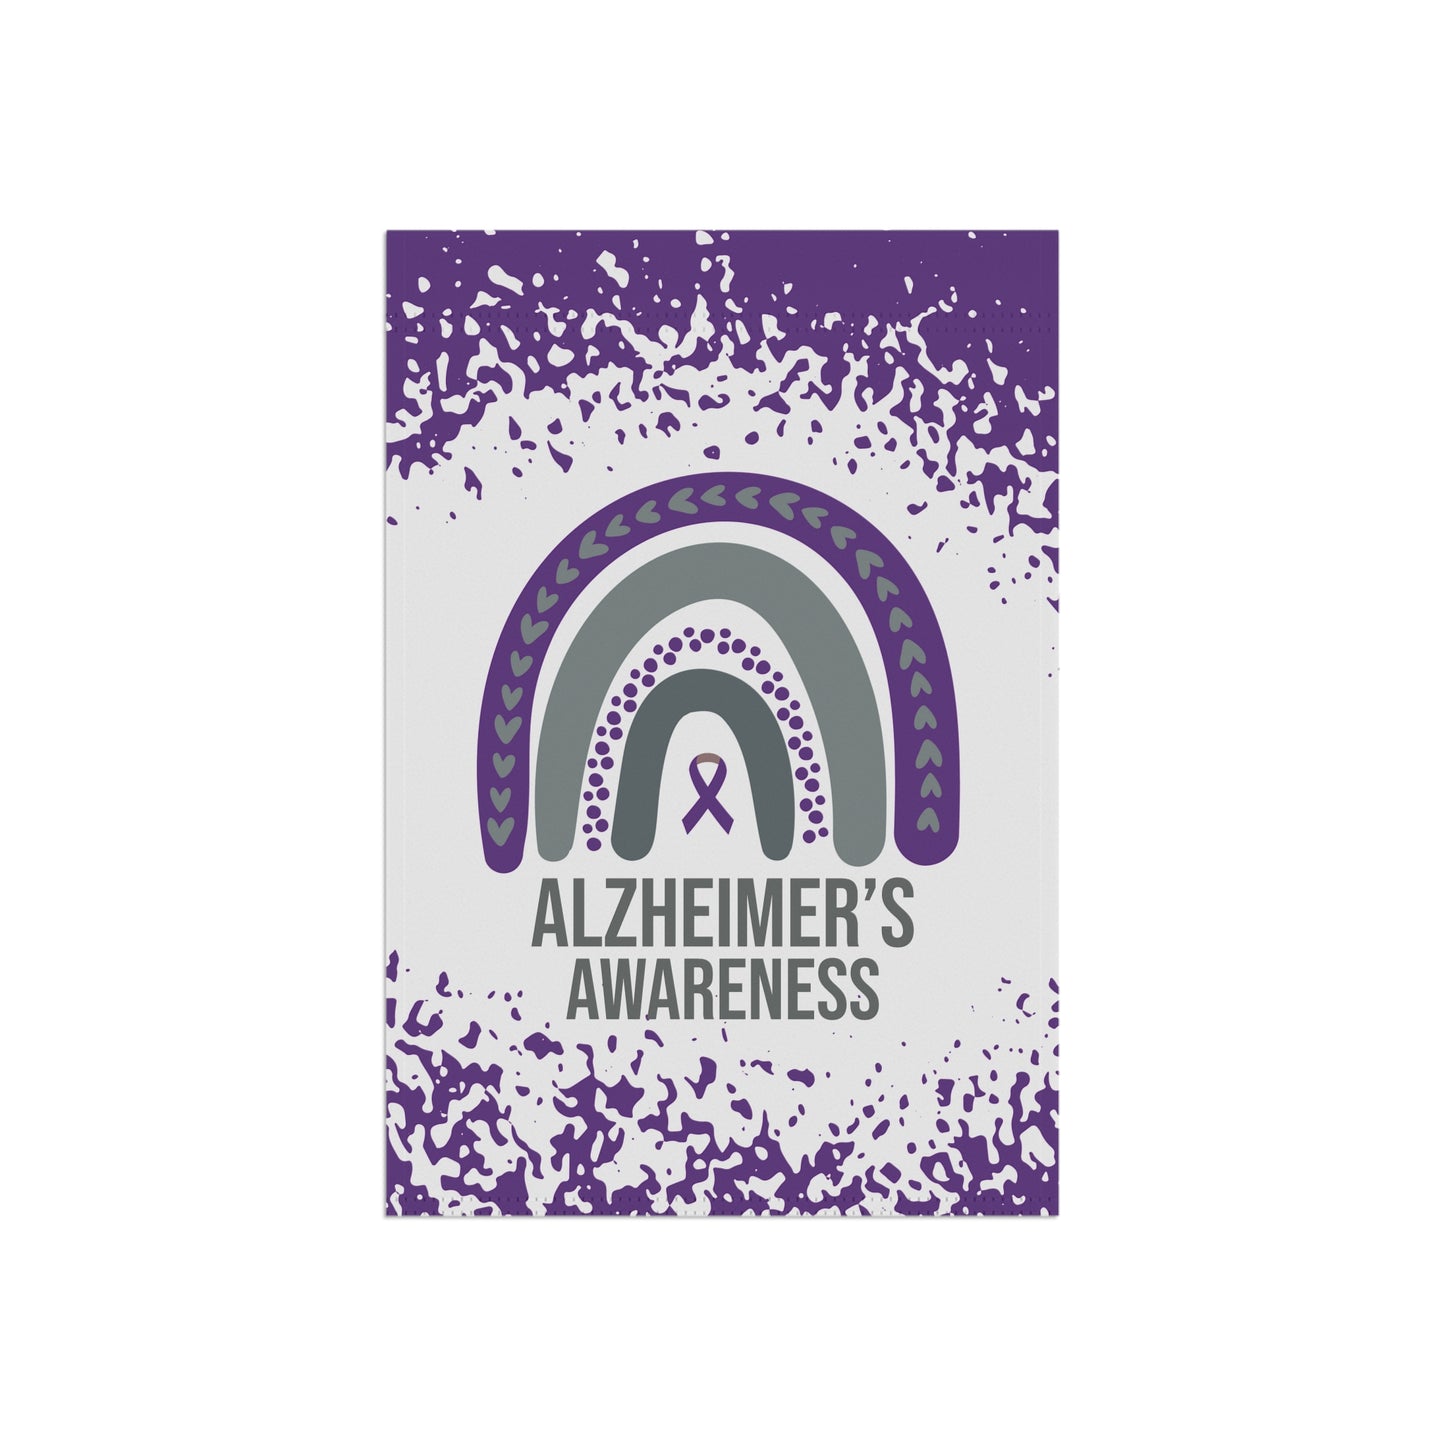 Alzheimers Awareness Garden Flag | Welcome Sign |  New Home | Decorative House Banner | Purple Awareness Ribbon  | Support